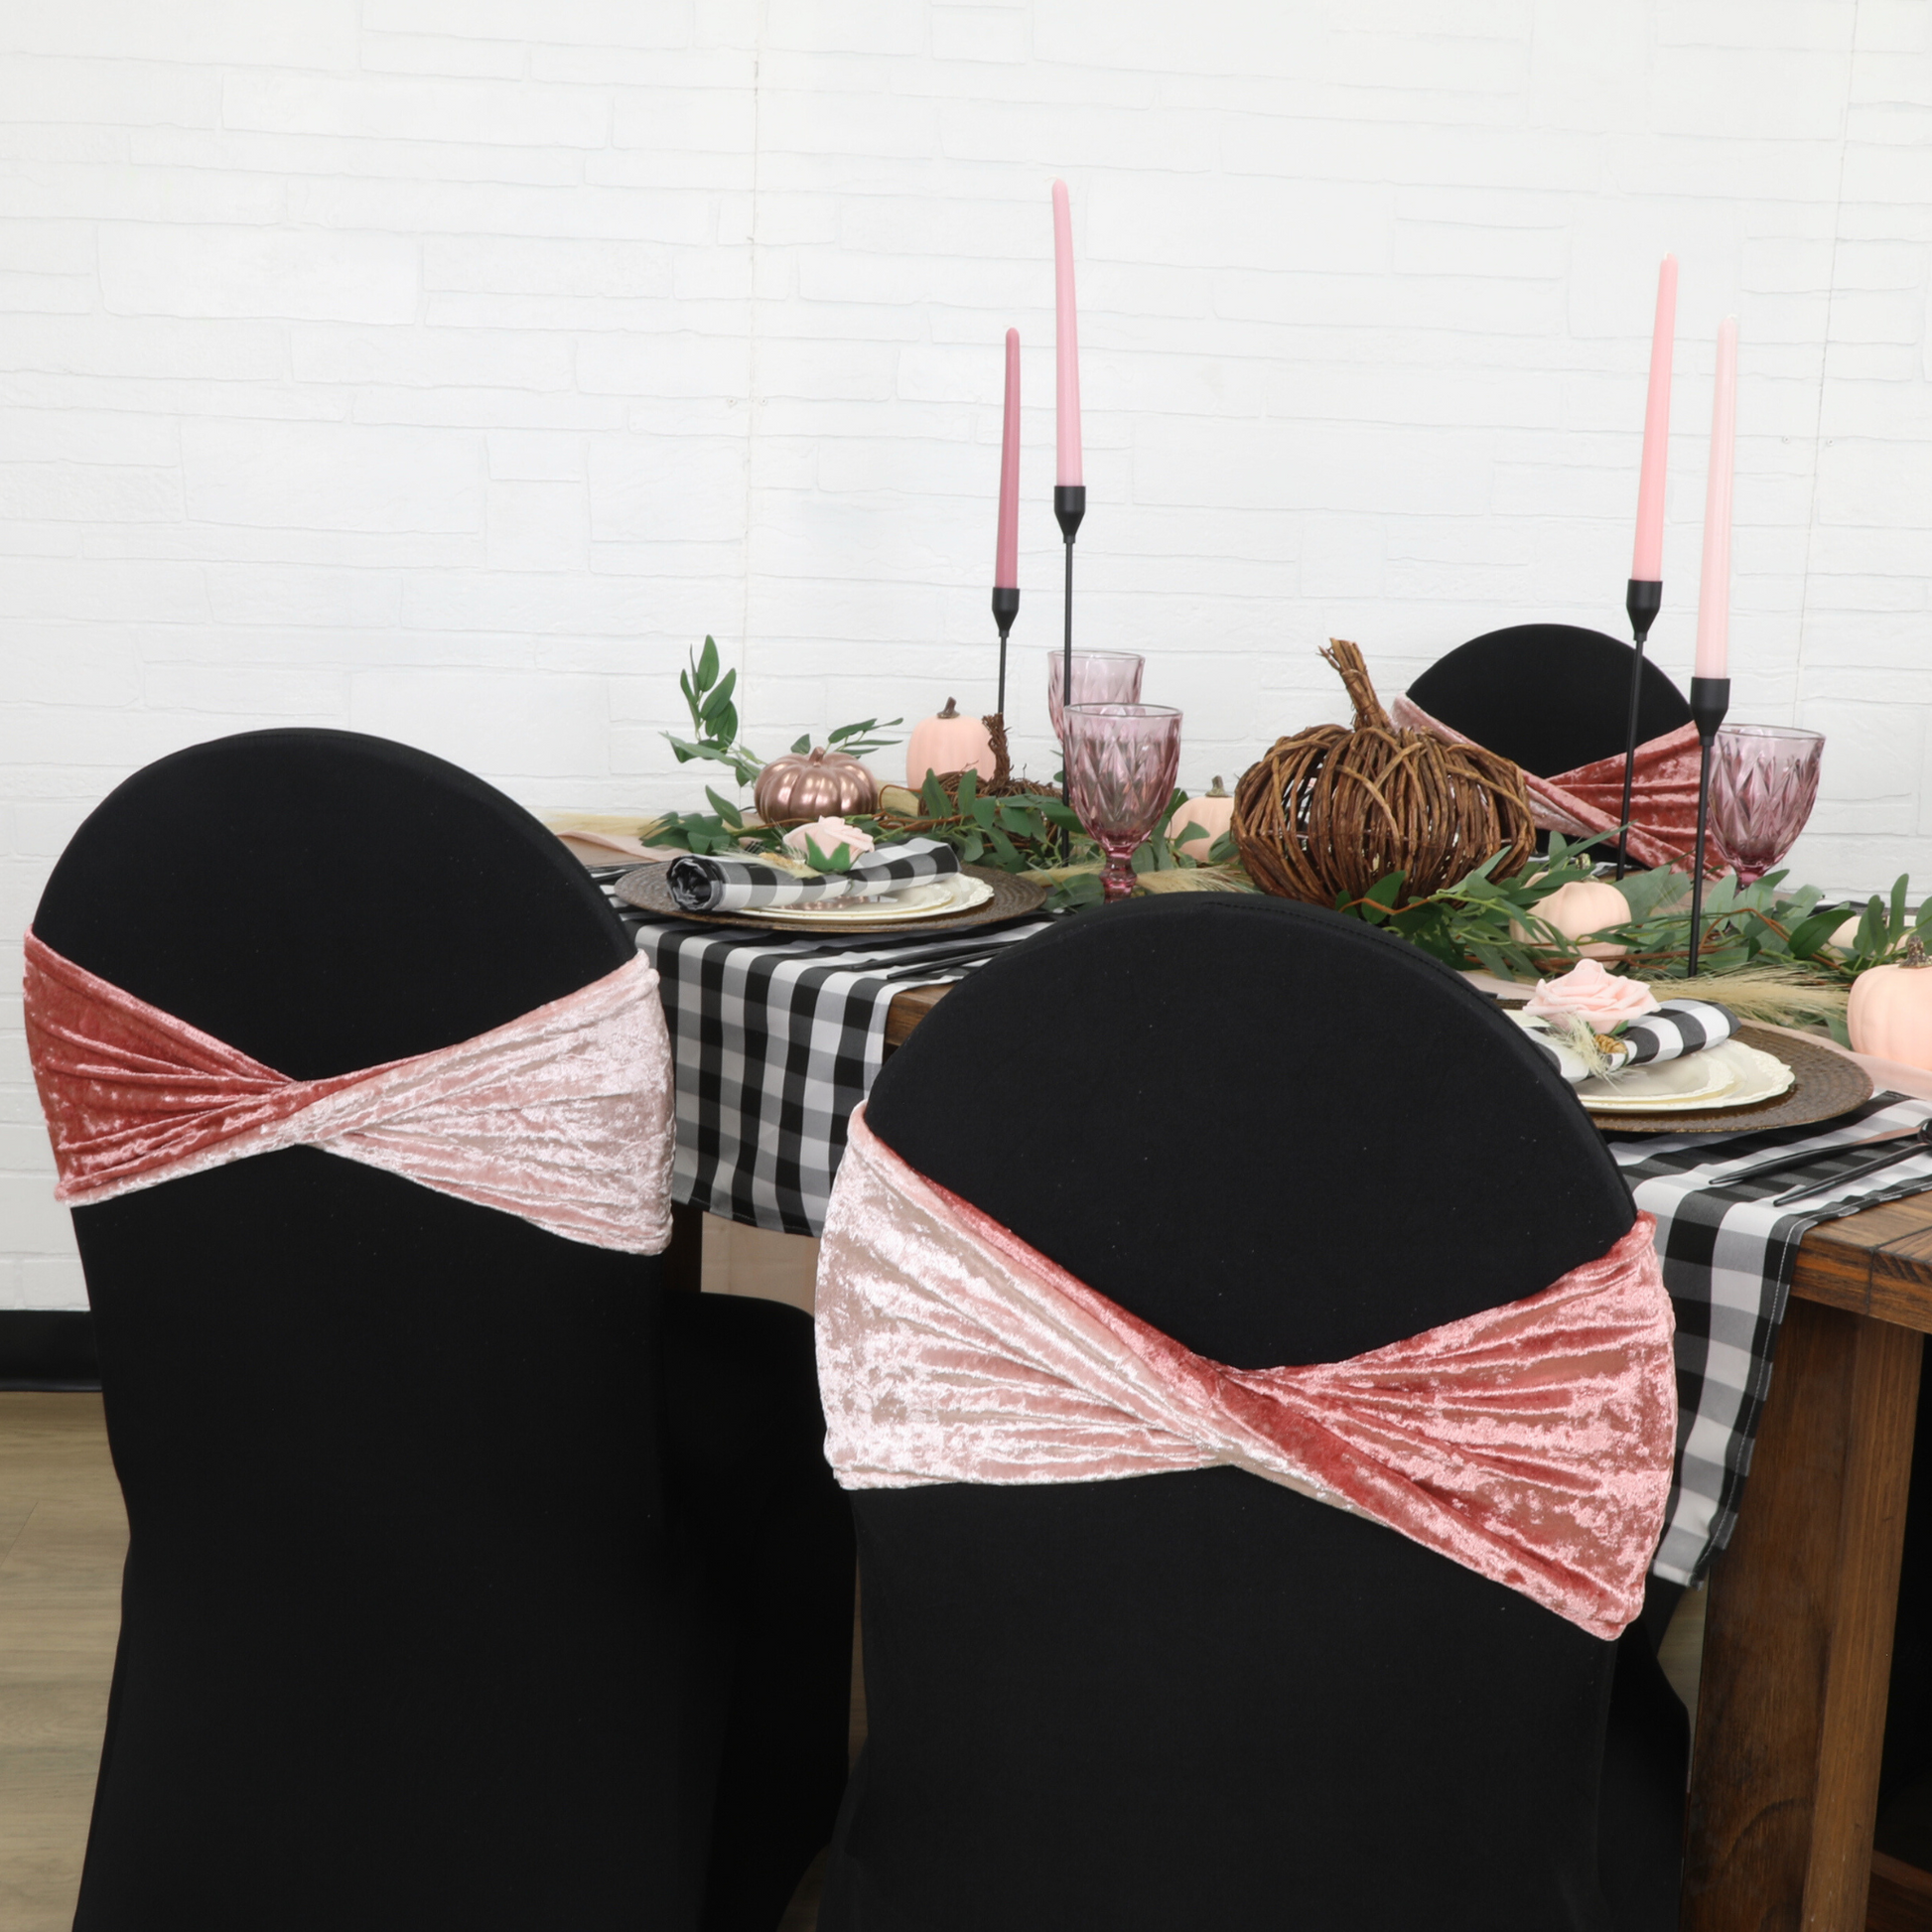 Stretch Banquet Chair Cover Black - ASAP Linen